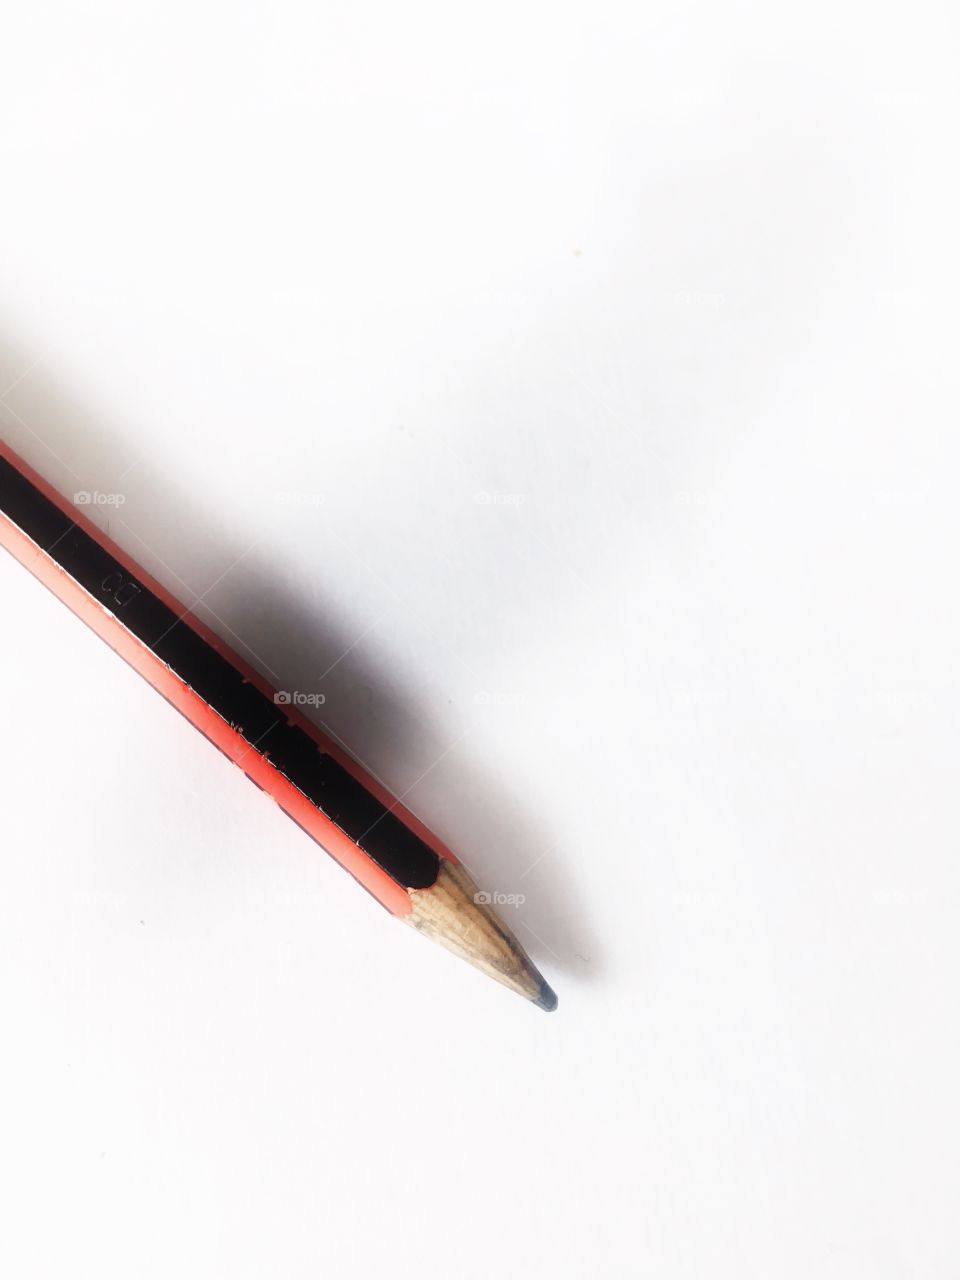 Single graphite pencil on white background 